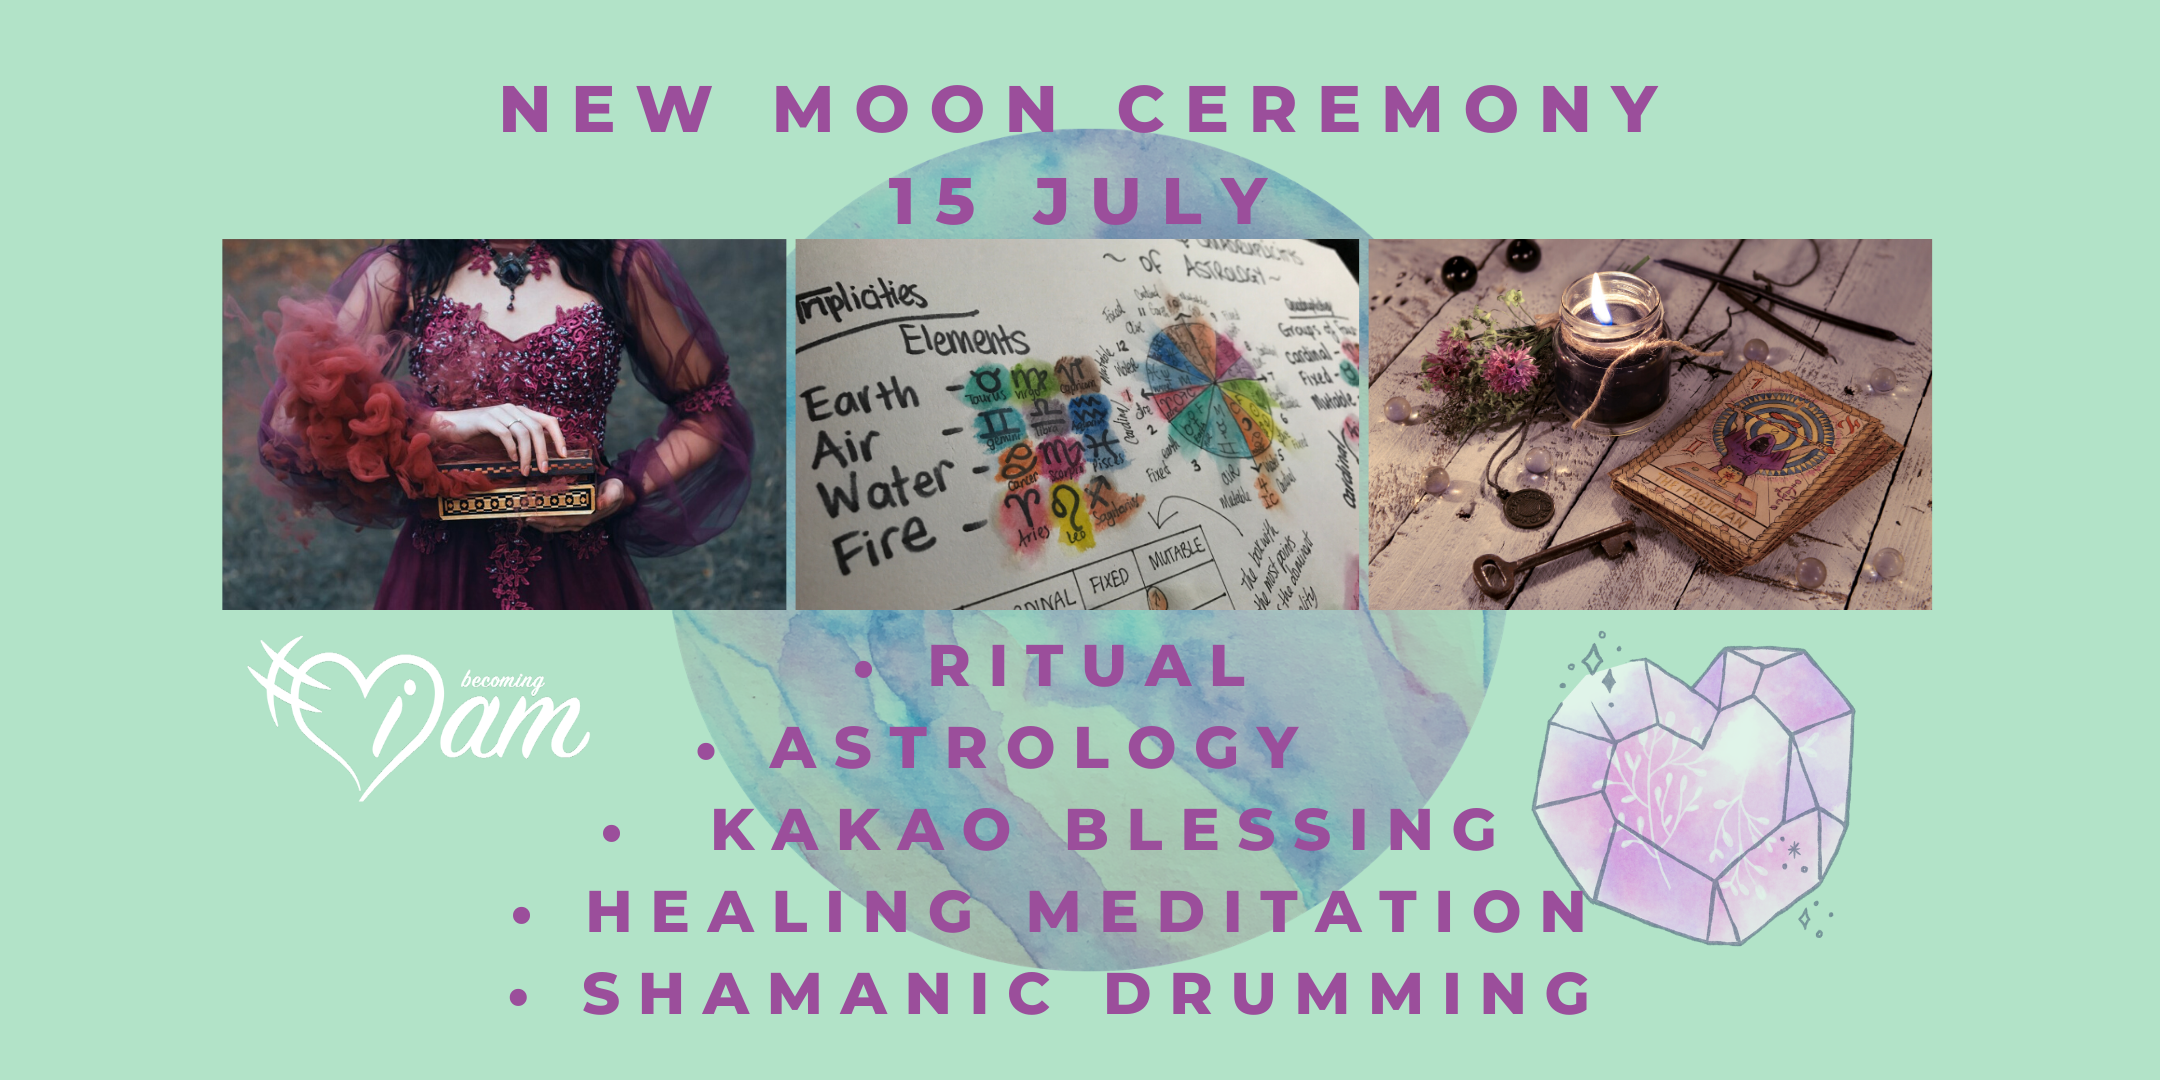 I AM - New Moon & Magical Ritual Ceremony